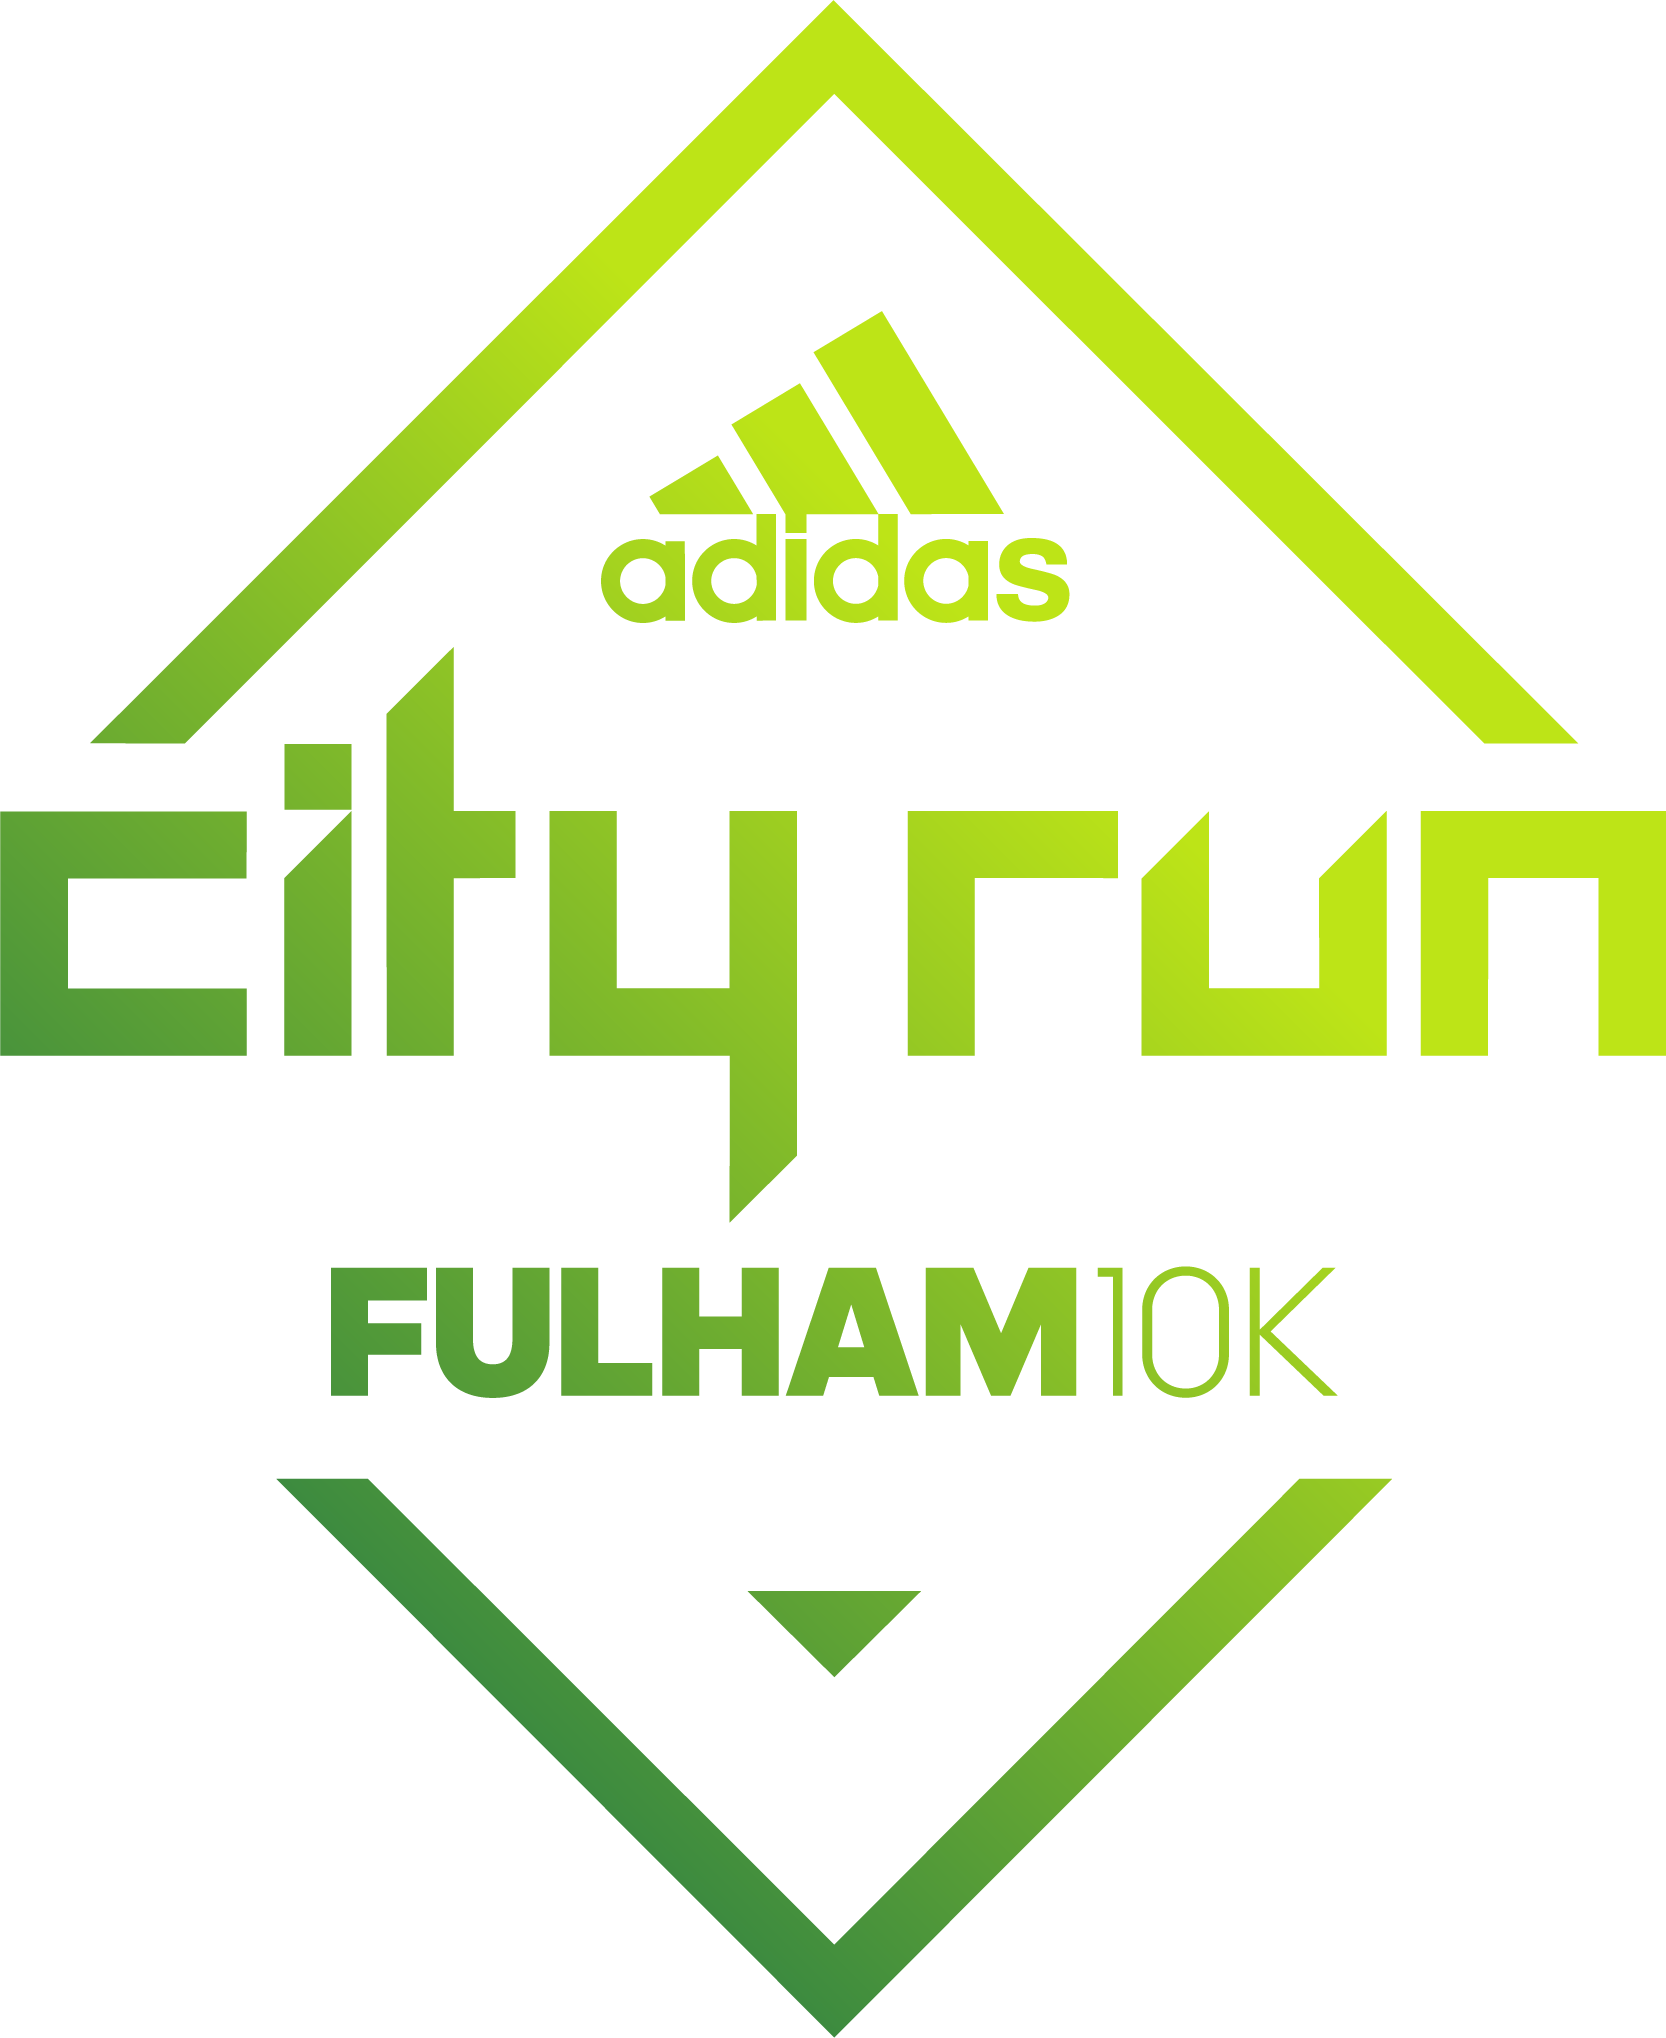 autómata cicatriz entrega adidas City Run: Fulham 10K 2020 - Running in London — Let's Do This